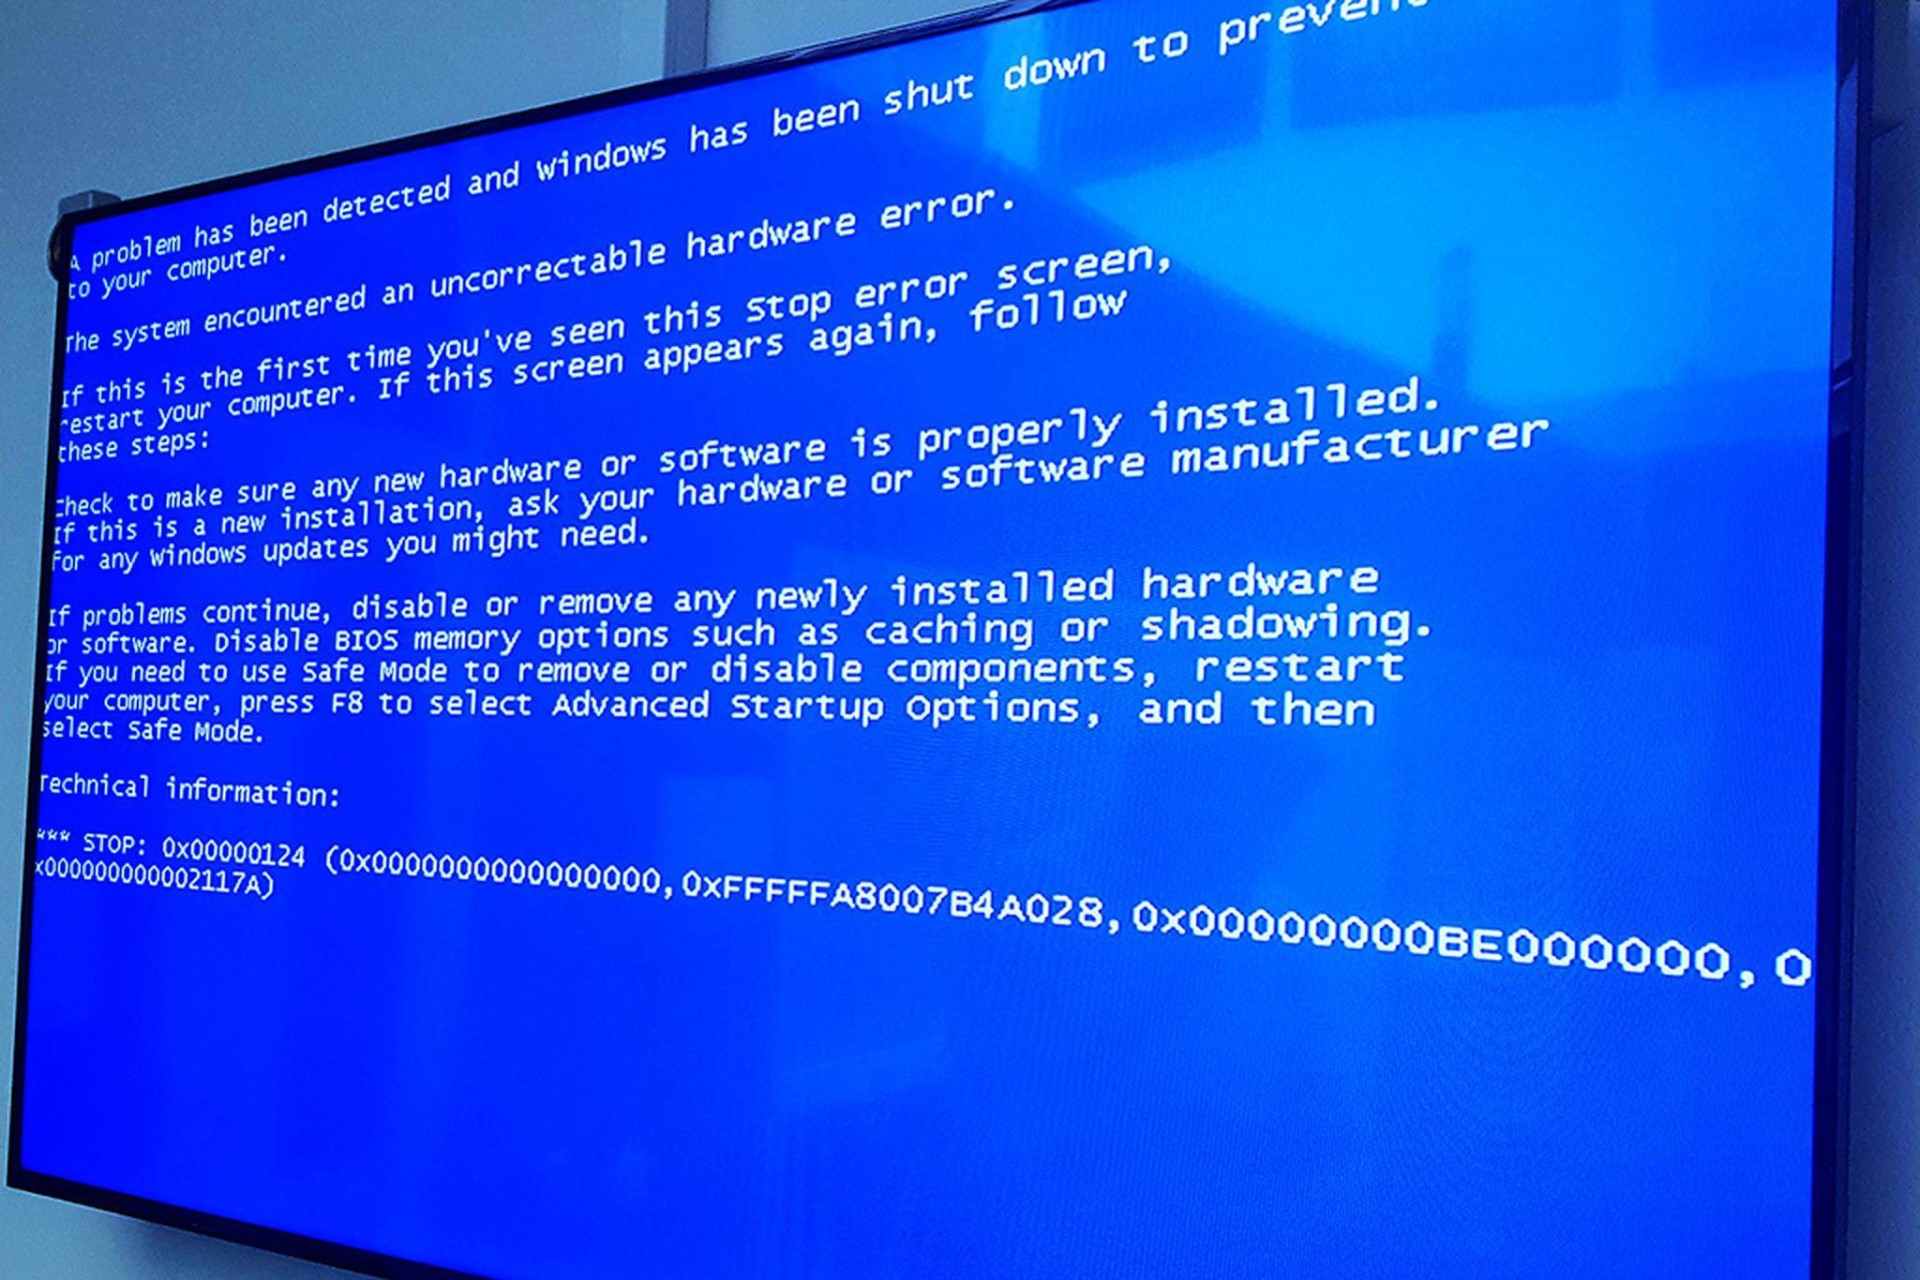 Fix Xhunter1 Sys Blue Screen Errors In Windows 10